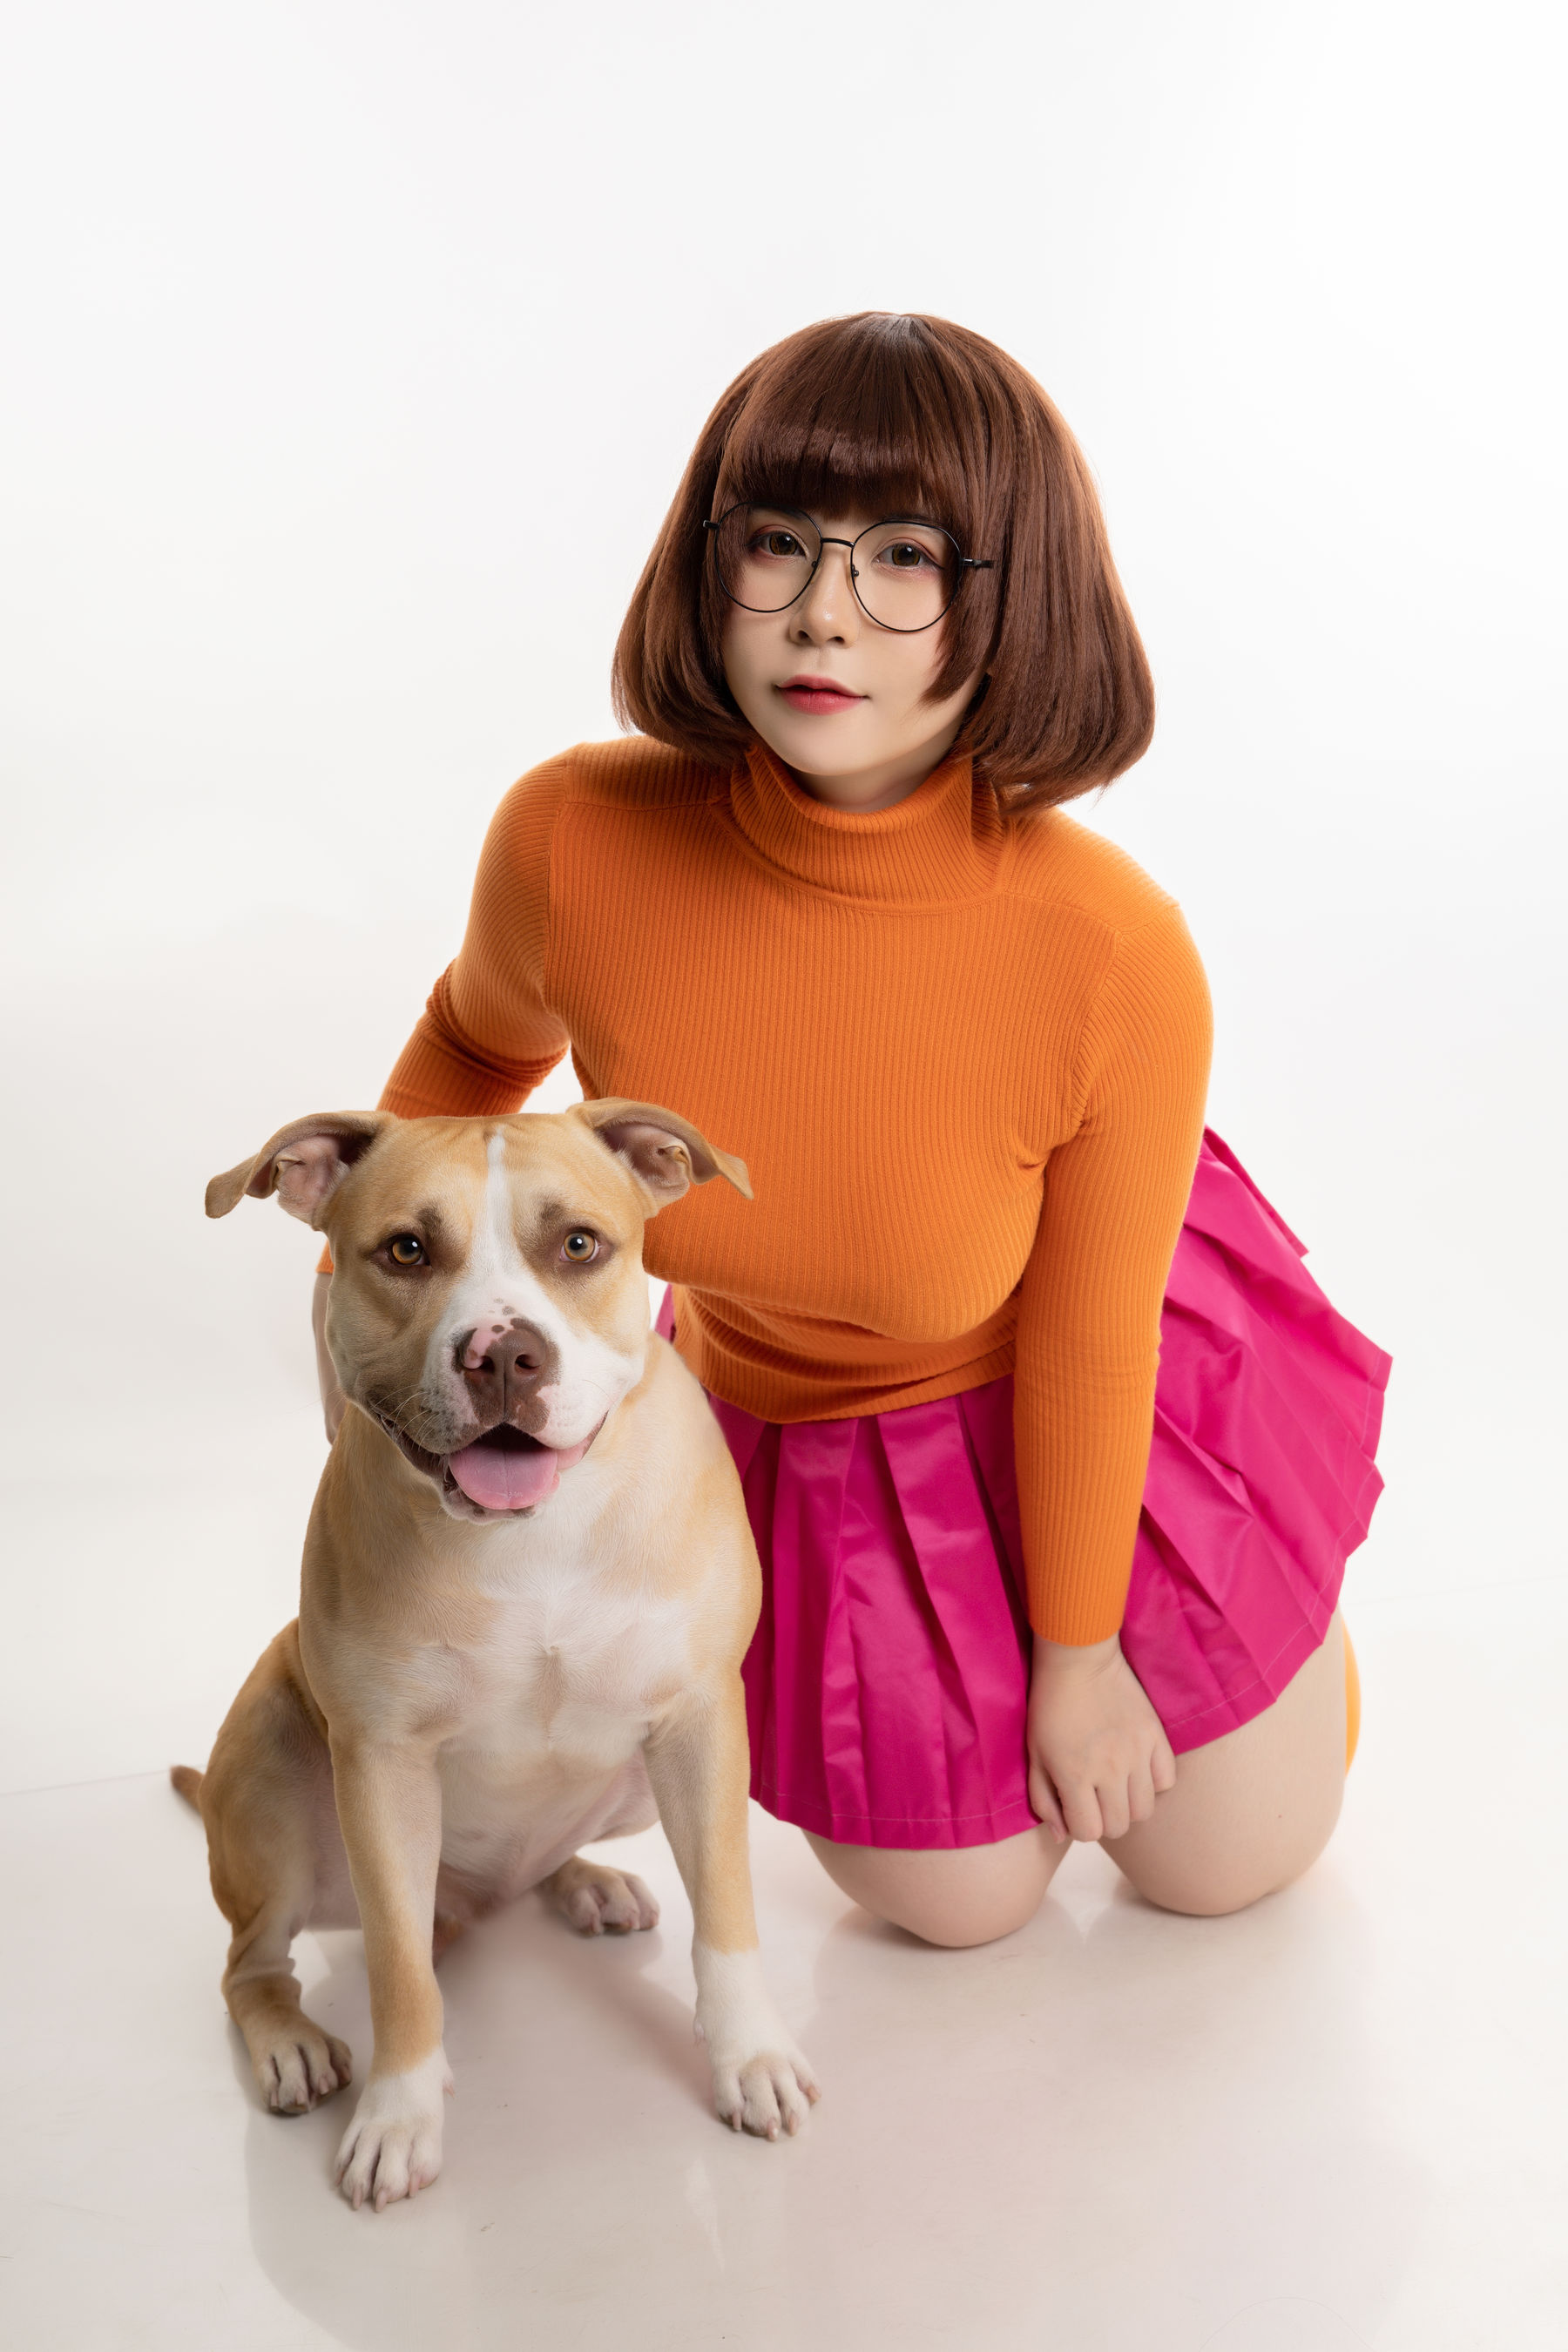 Uy Uy - Velma/(18P)